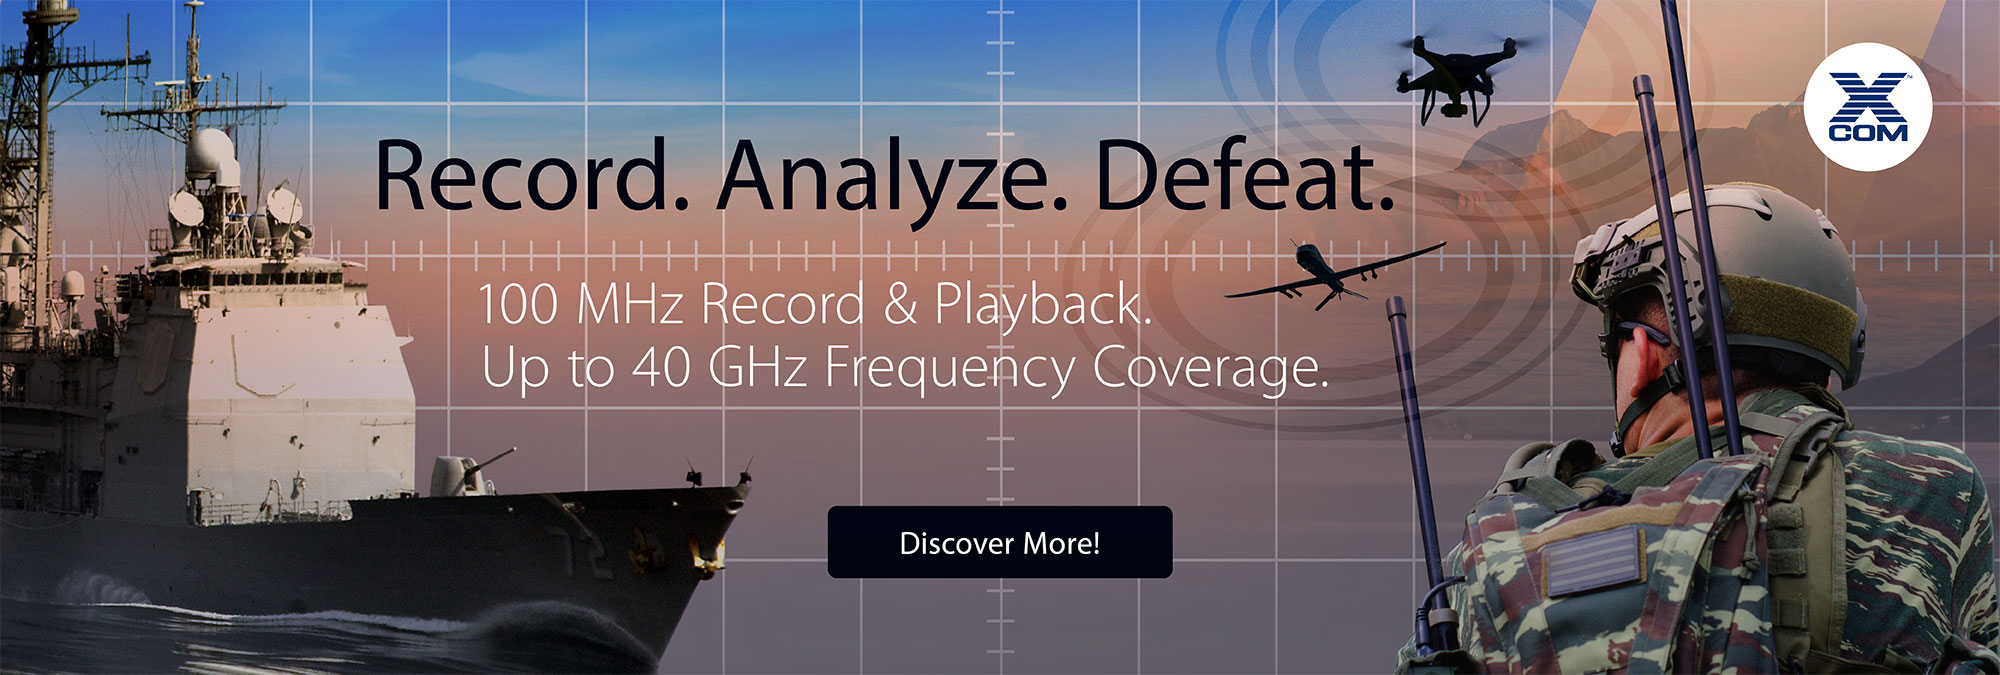 Record Analyze Defeat